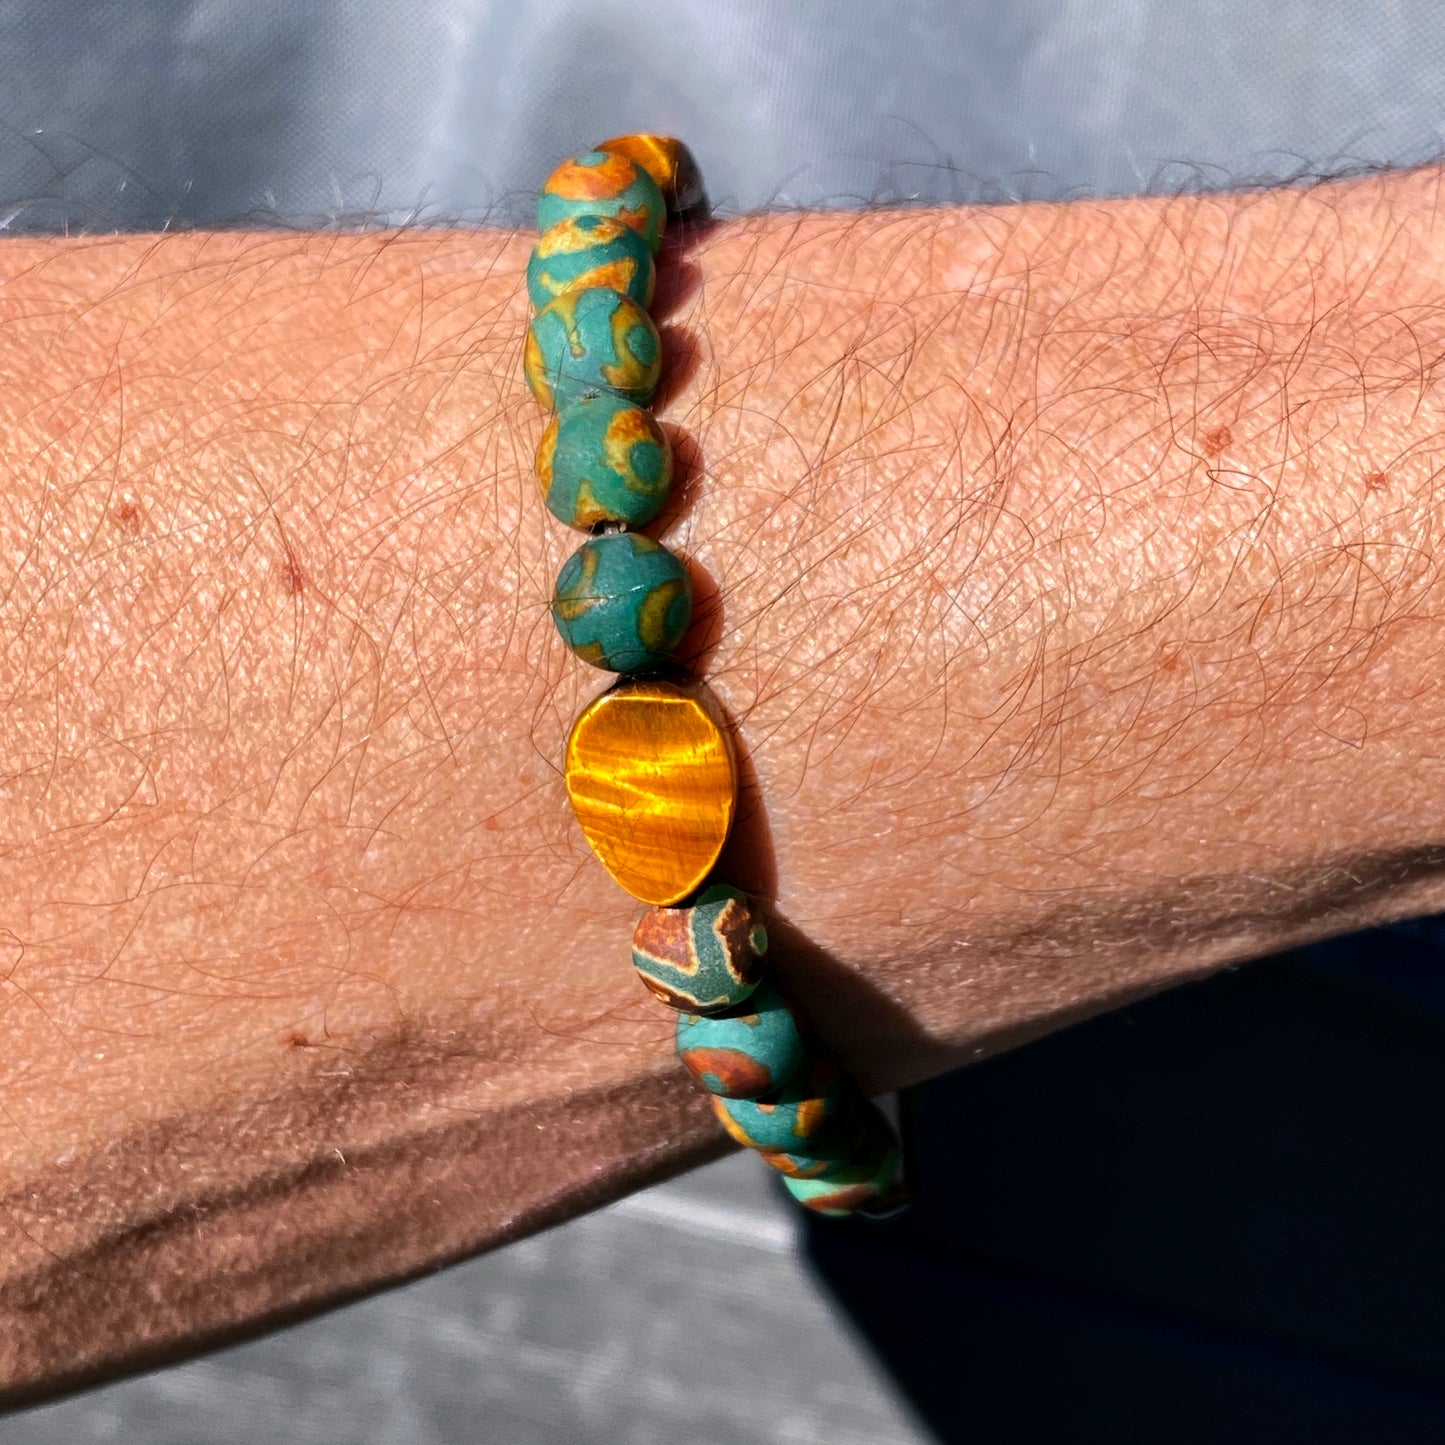 Tibetan agate and Tiger’s Eye  gemstone Bracelet